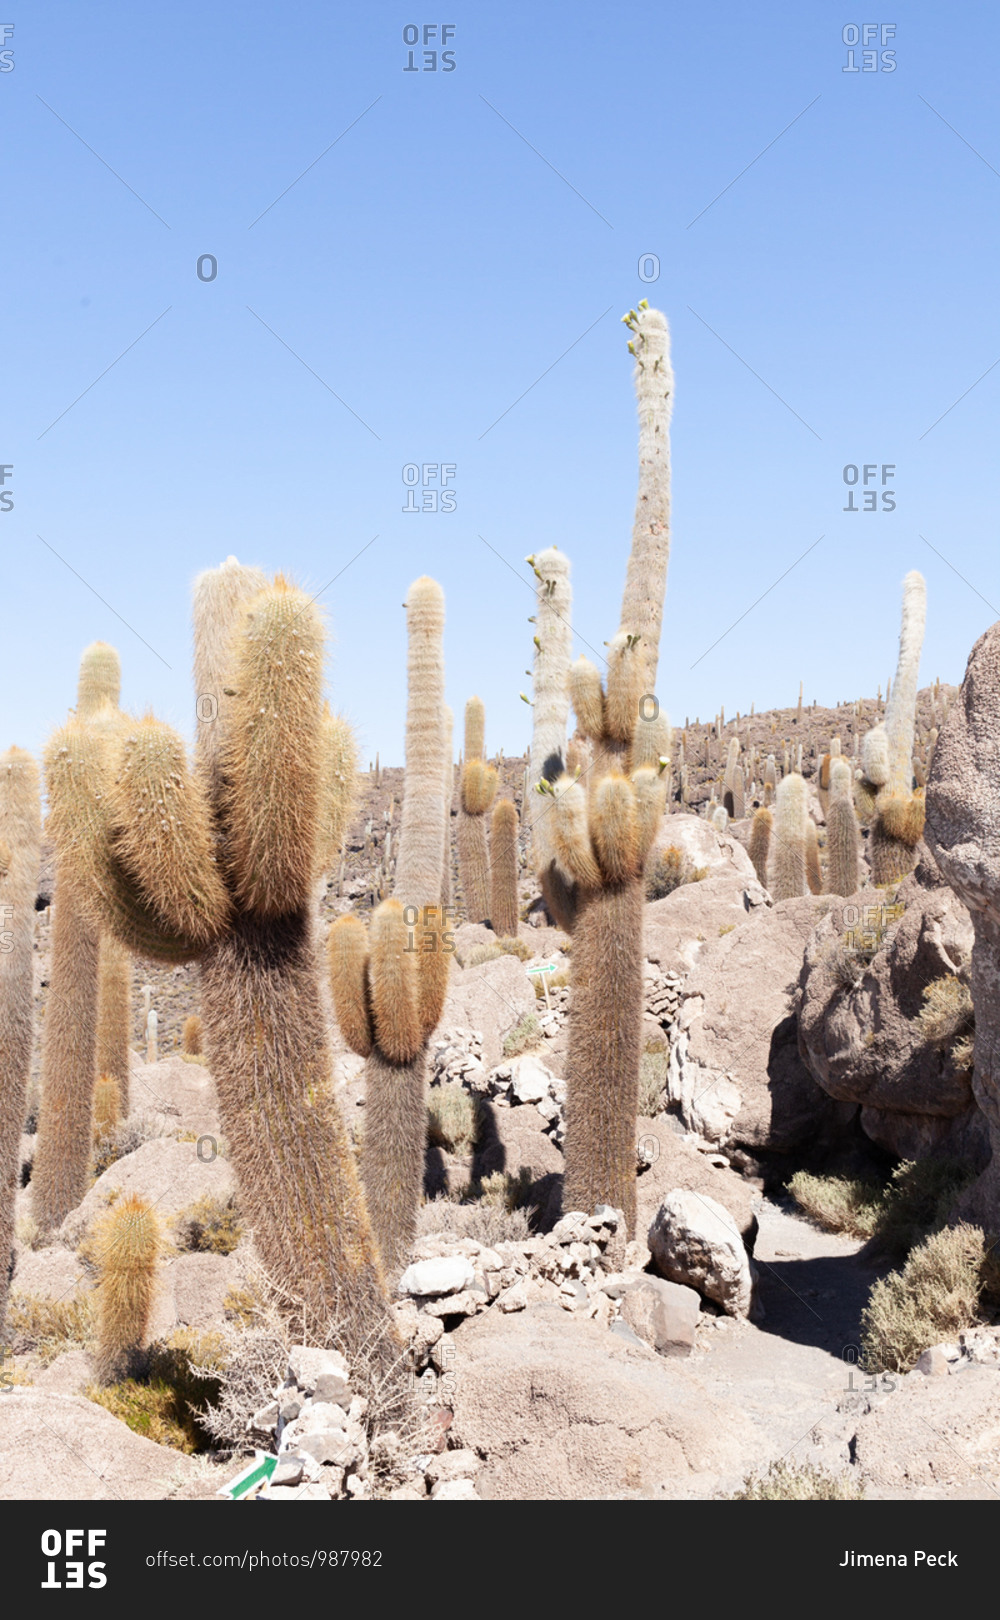 Cactus in Uyuni salt-flat in the Incahuasi island, Uyuni salt-flat in Bolivia, South America